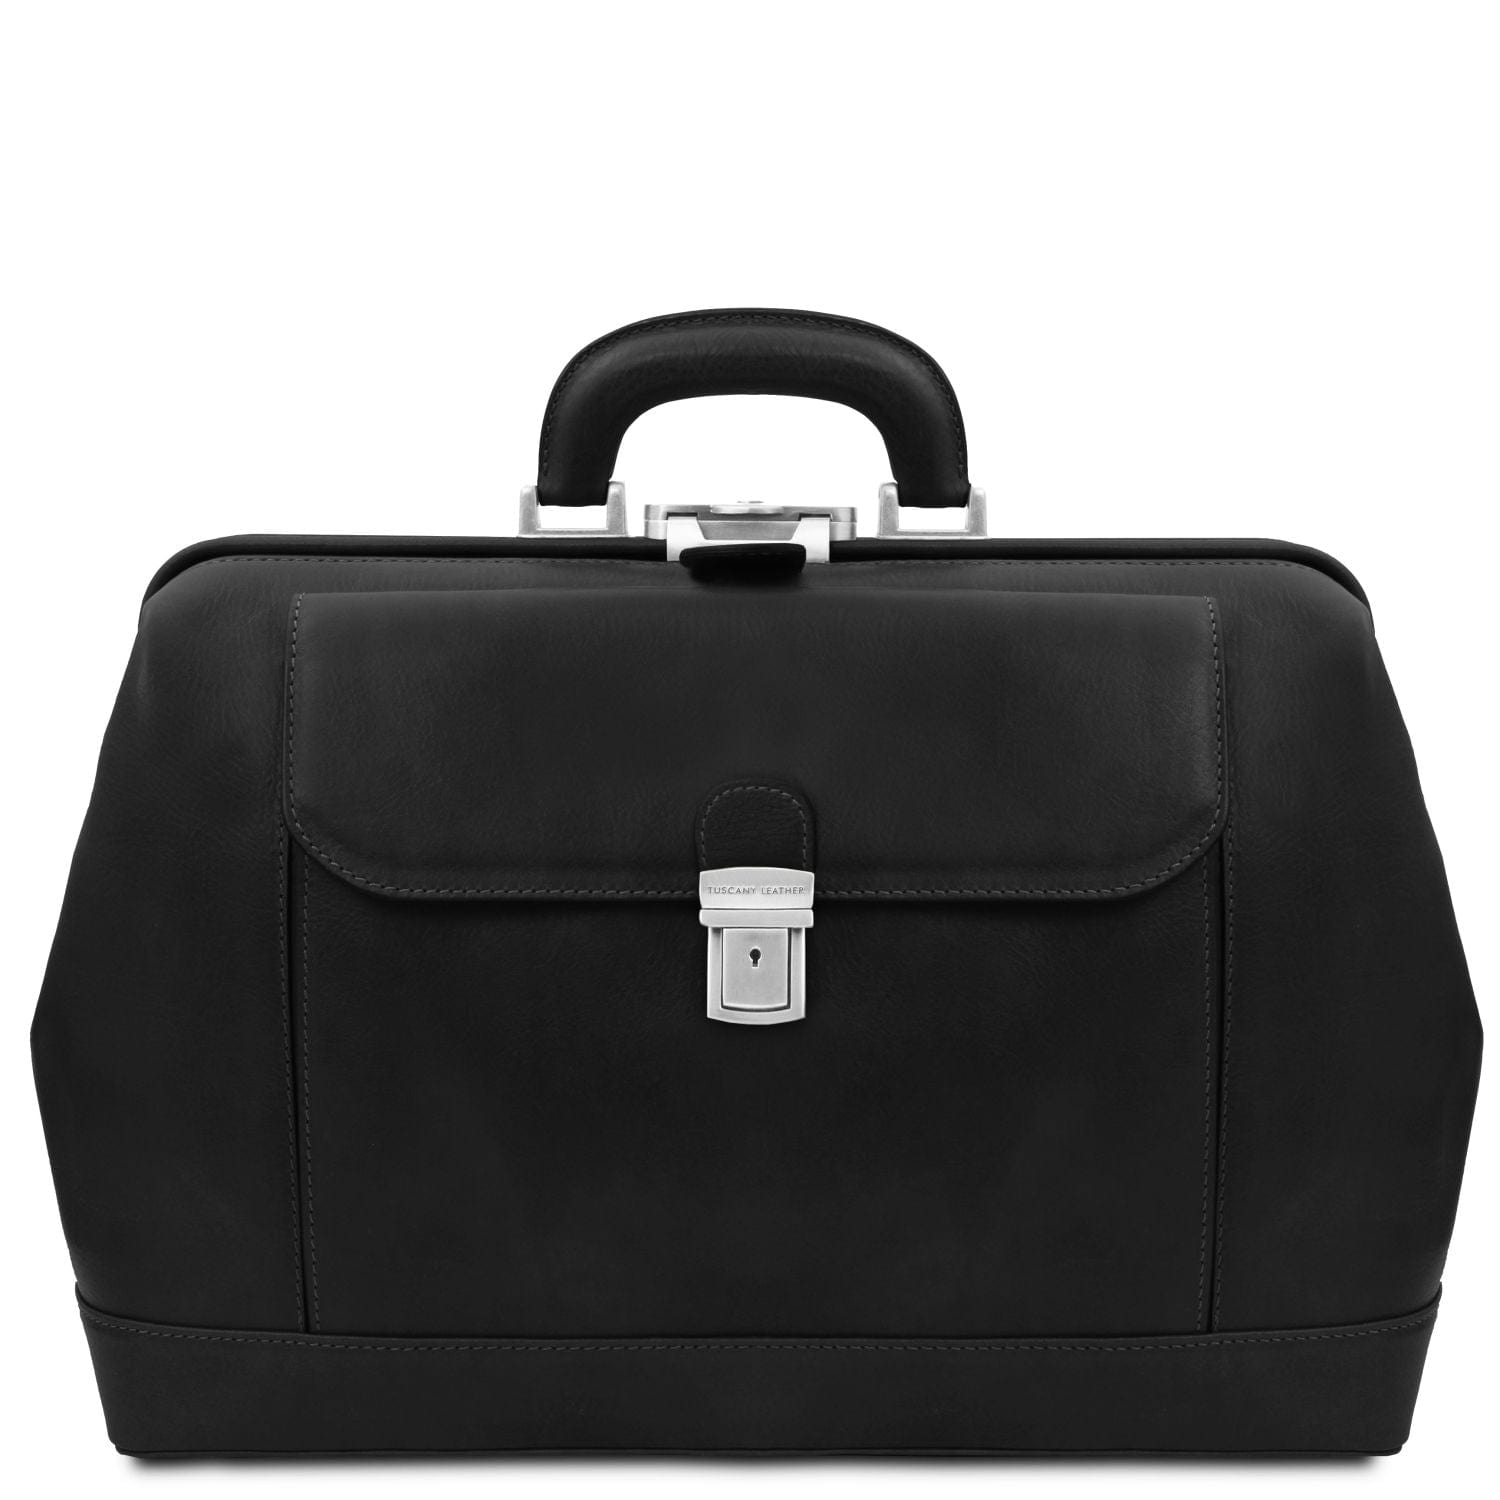 Leonardo - Exclusive leather doctor bag | TL142342 - Premium Doctor bags - Shop now at San Rocco Italia